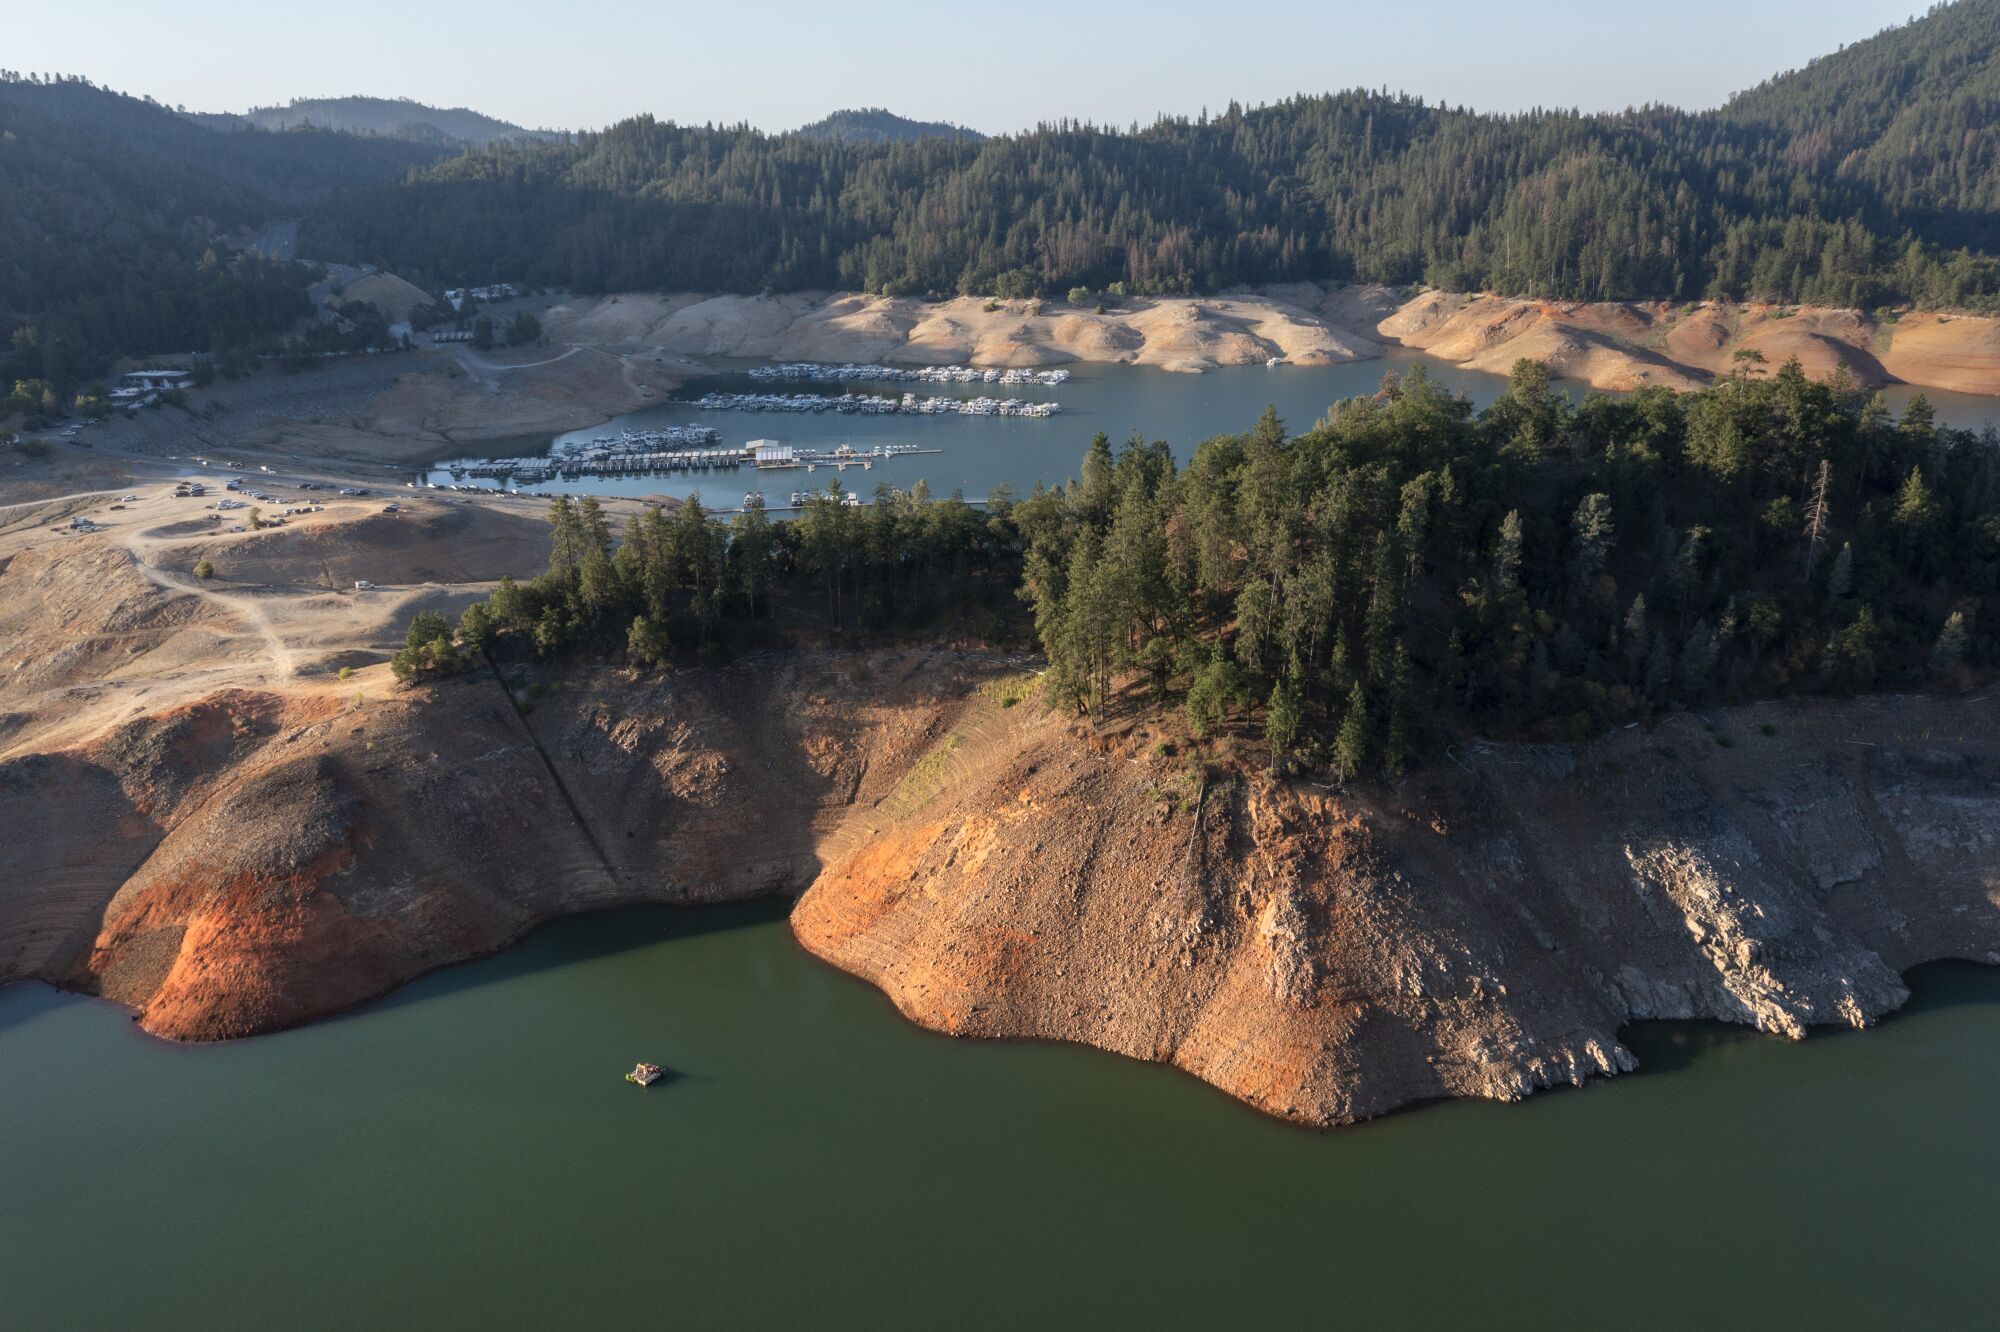 Drone photos show California drought severity at Lake Shasta Los